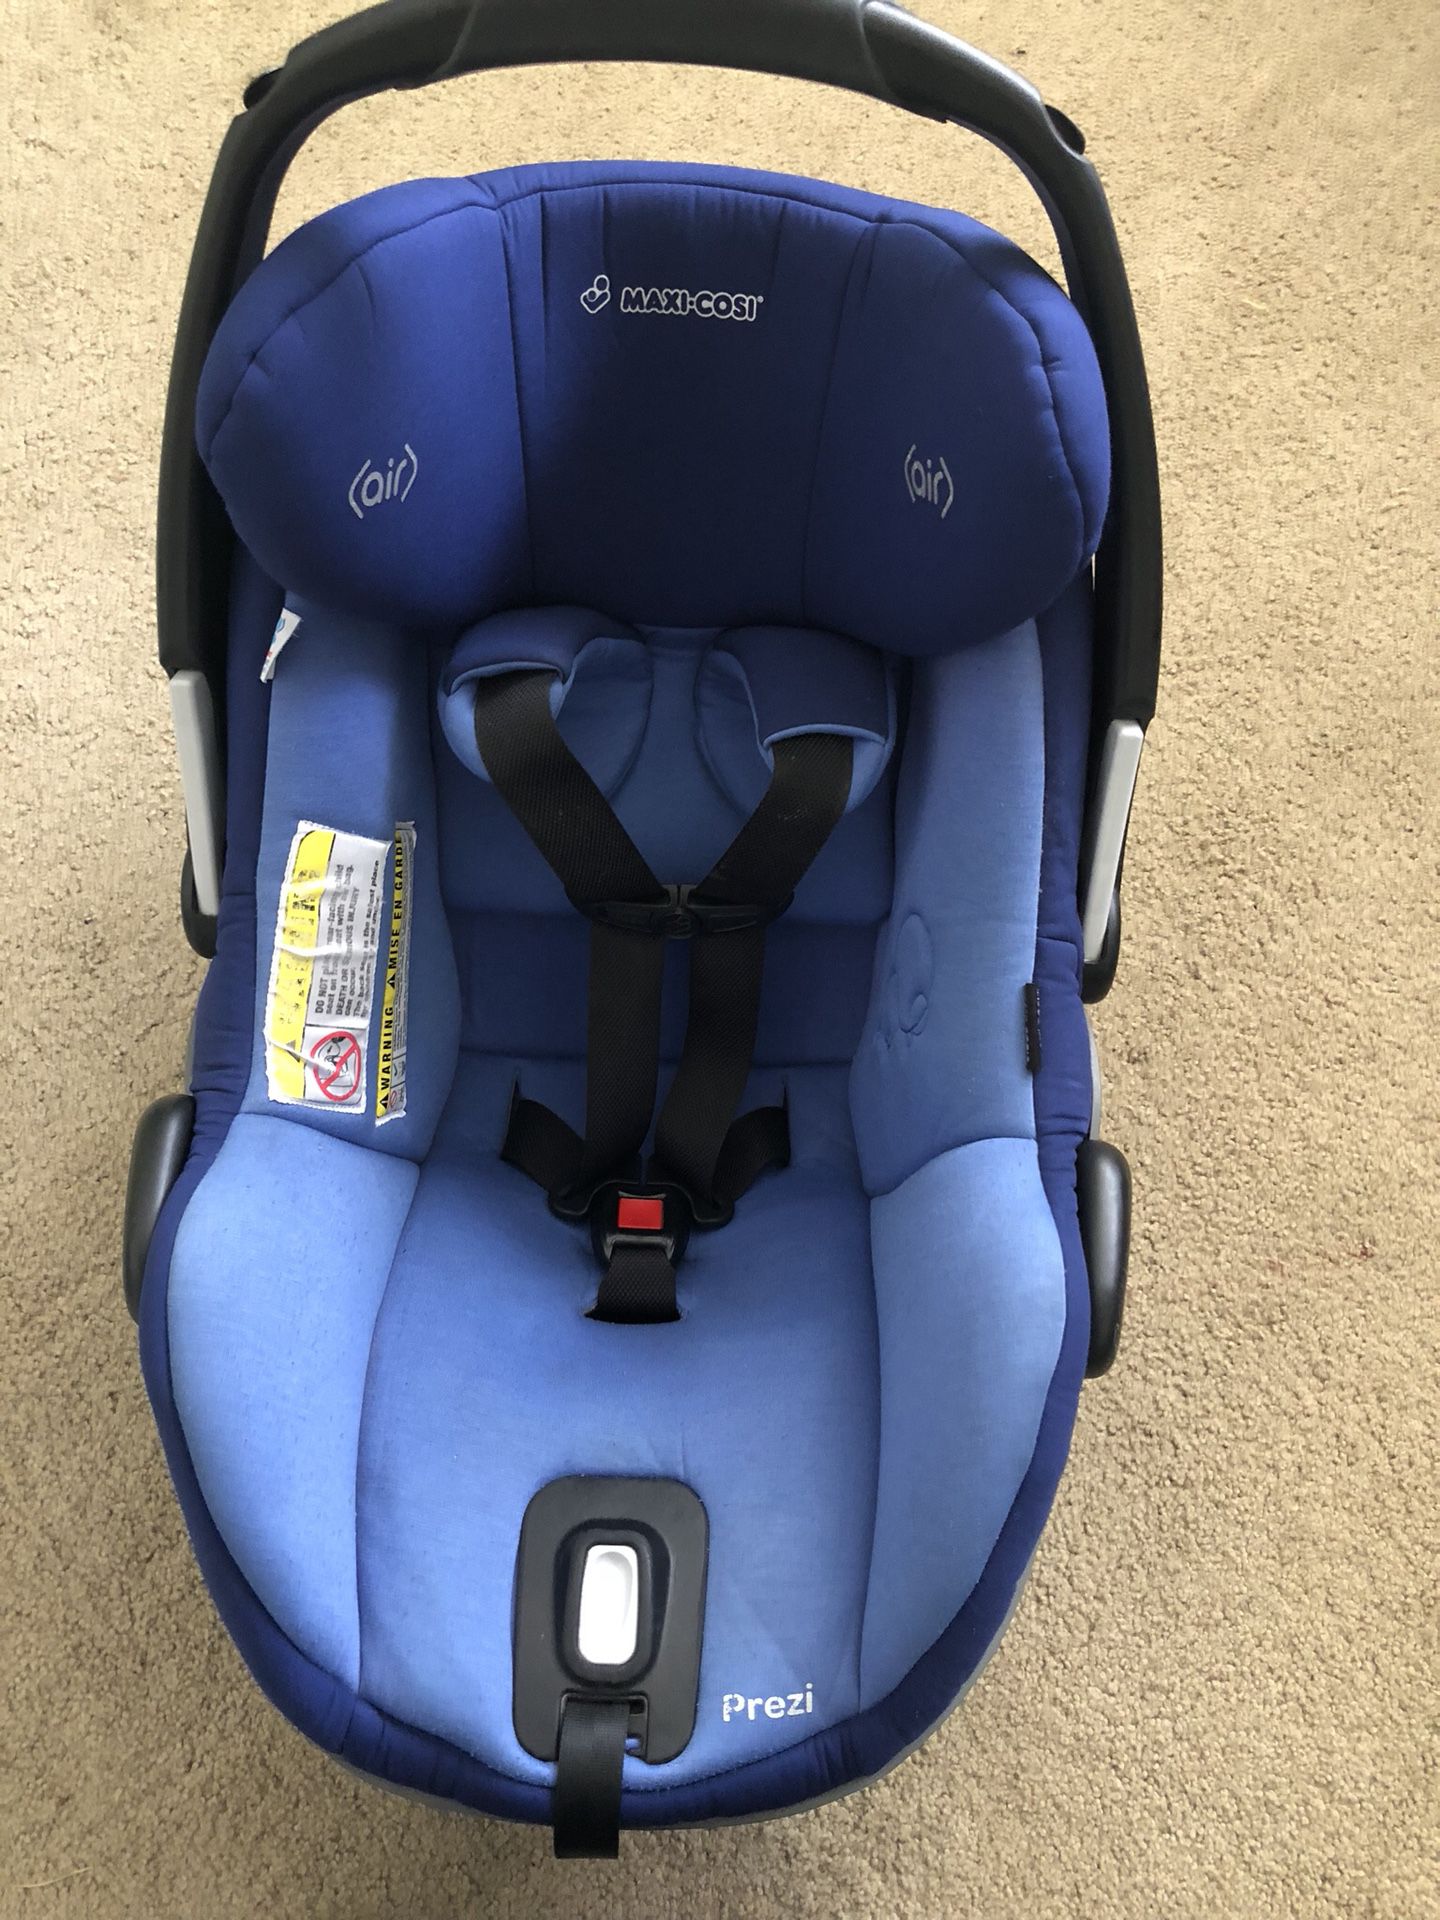 Maxi Cosi Prezi infant car seat with base